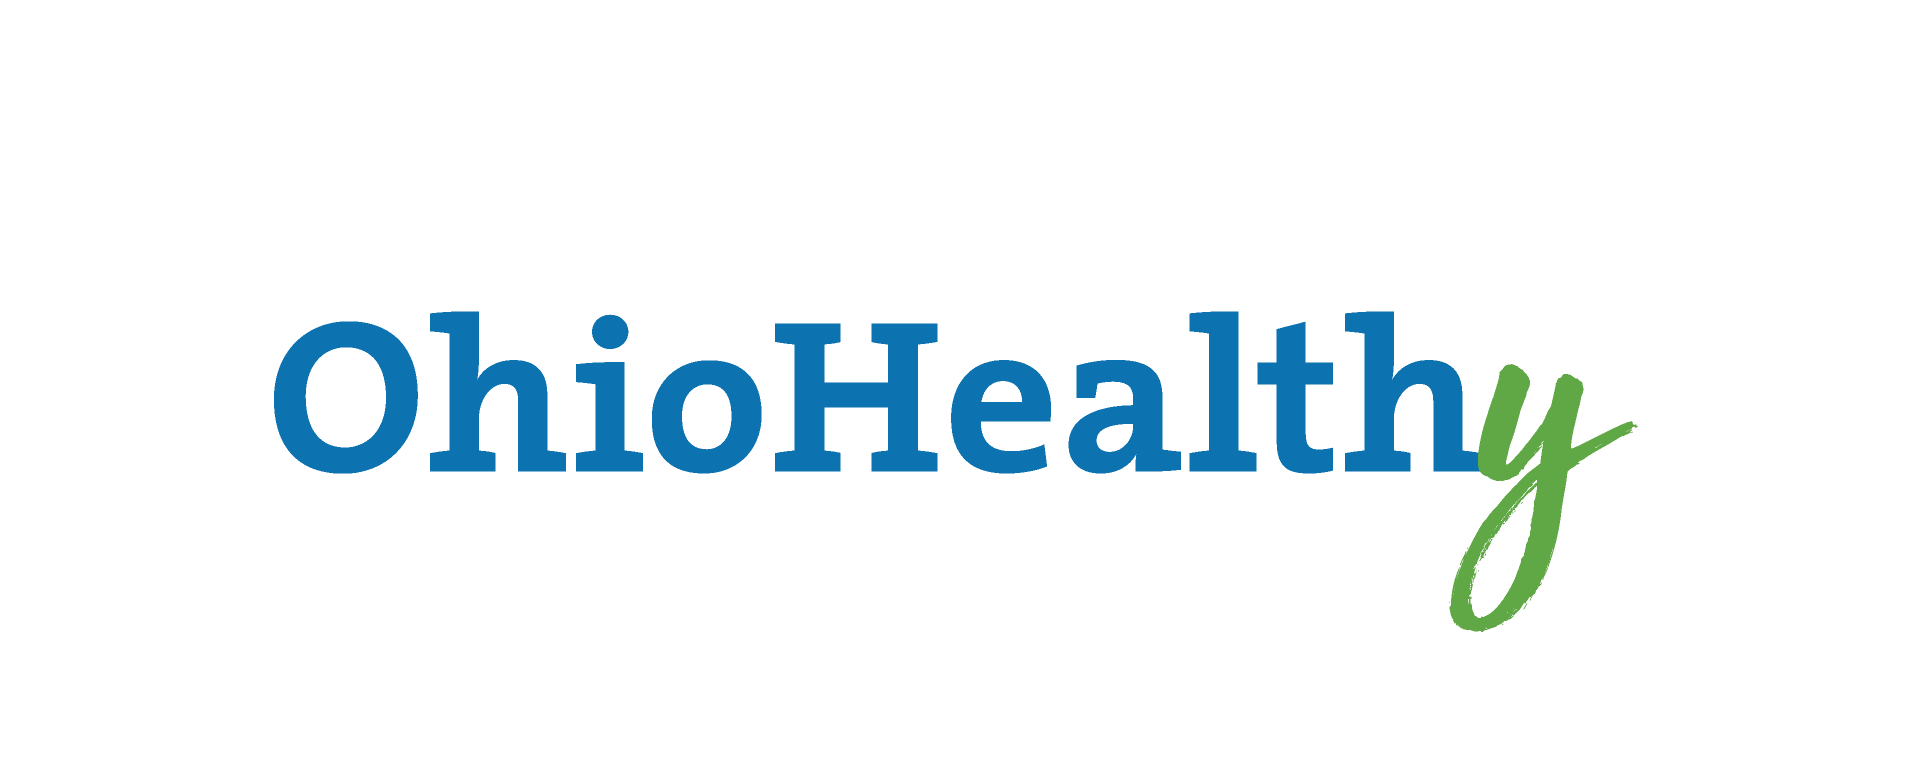 OhioHealthy logo.